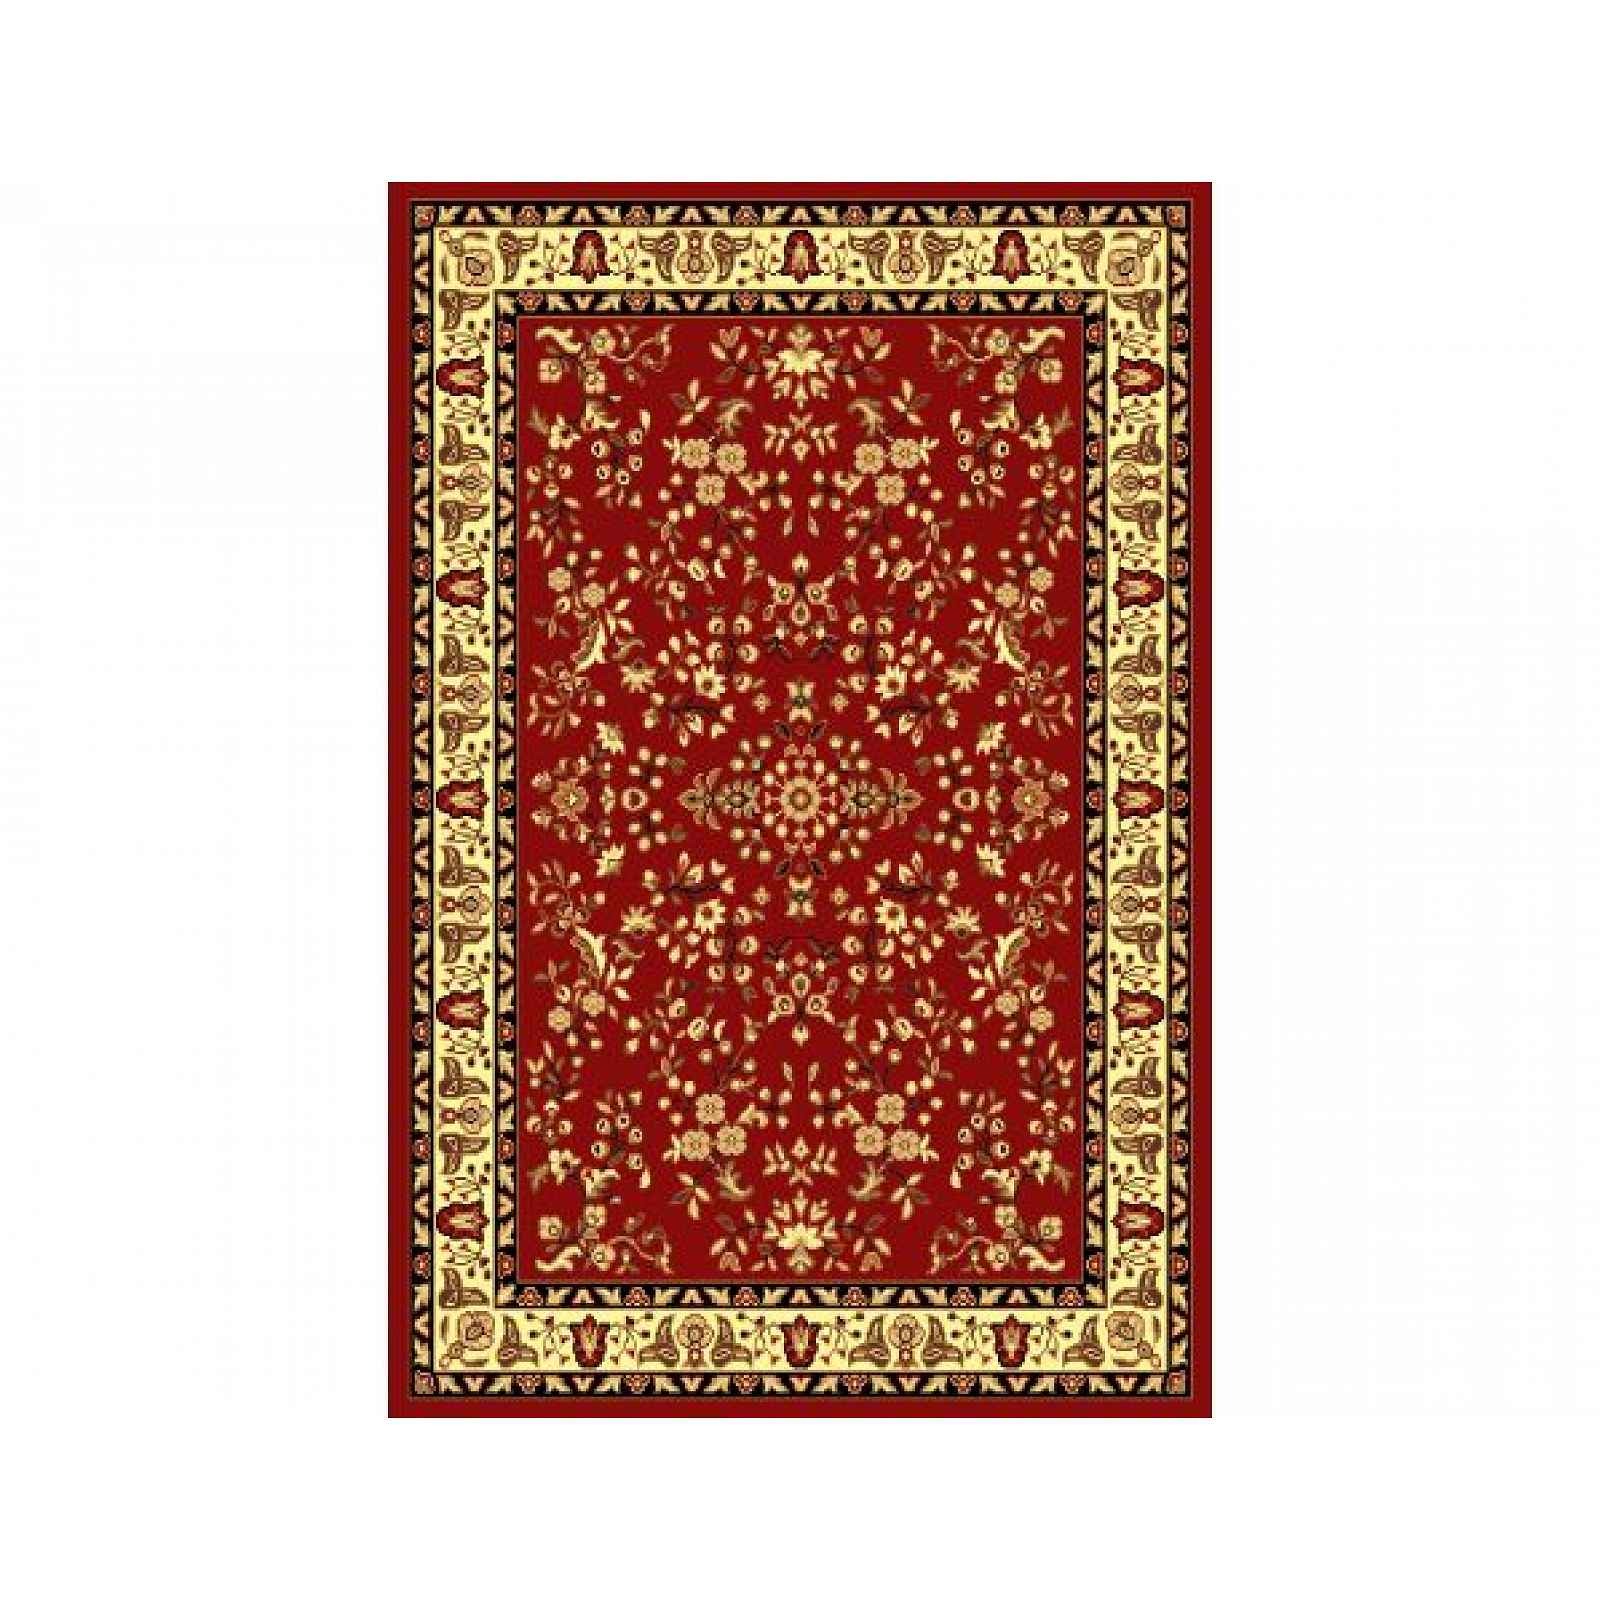 Kusový koberec Gold 259-22, 160x225 cm